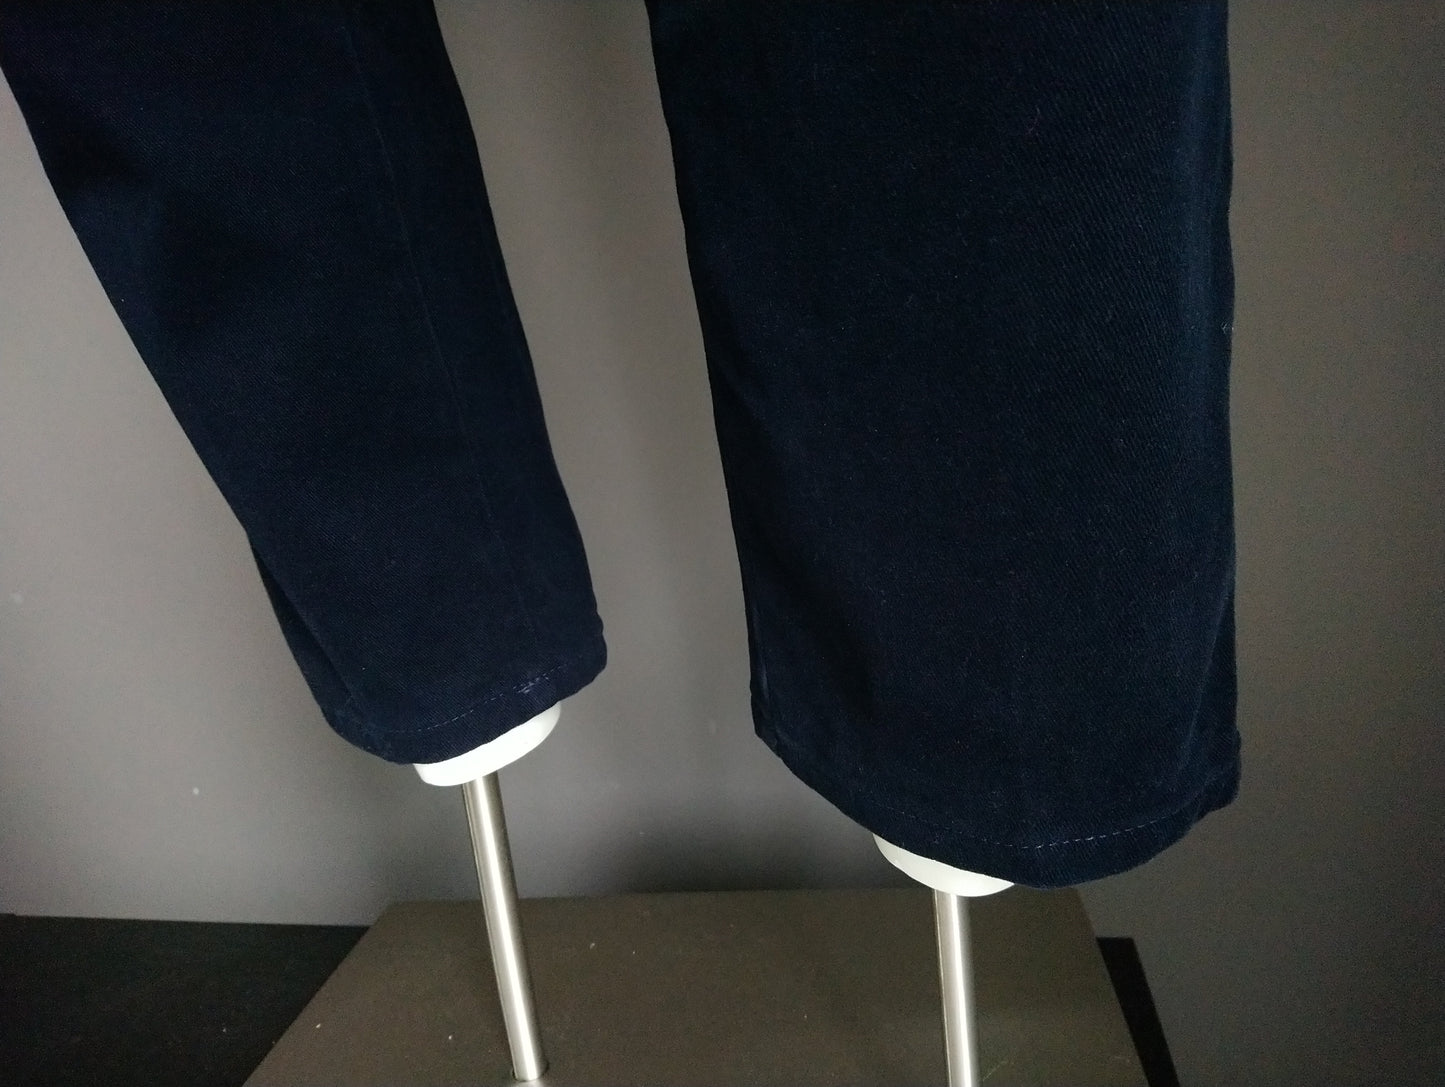 MMX broek / pantalon. Donker Blauw gekleurd. Maat 54 / XL / W36 - L30. ingekort.